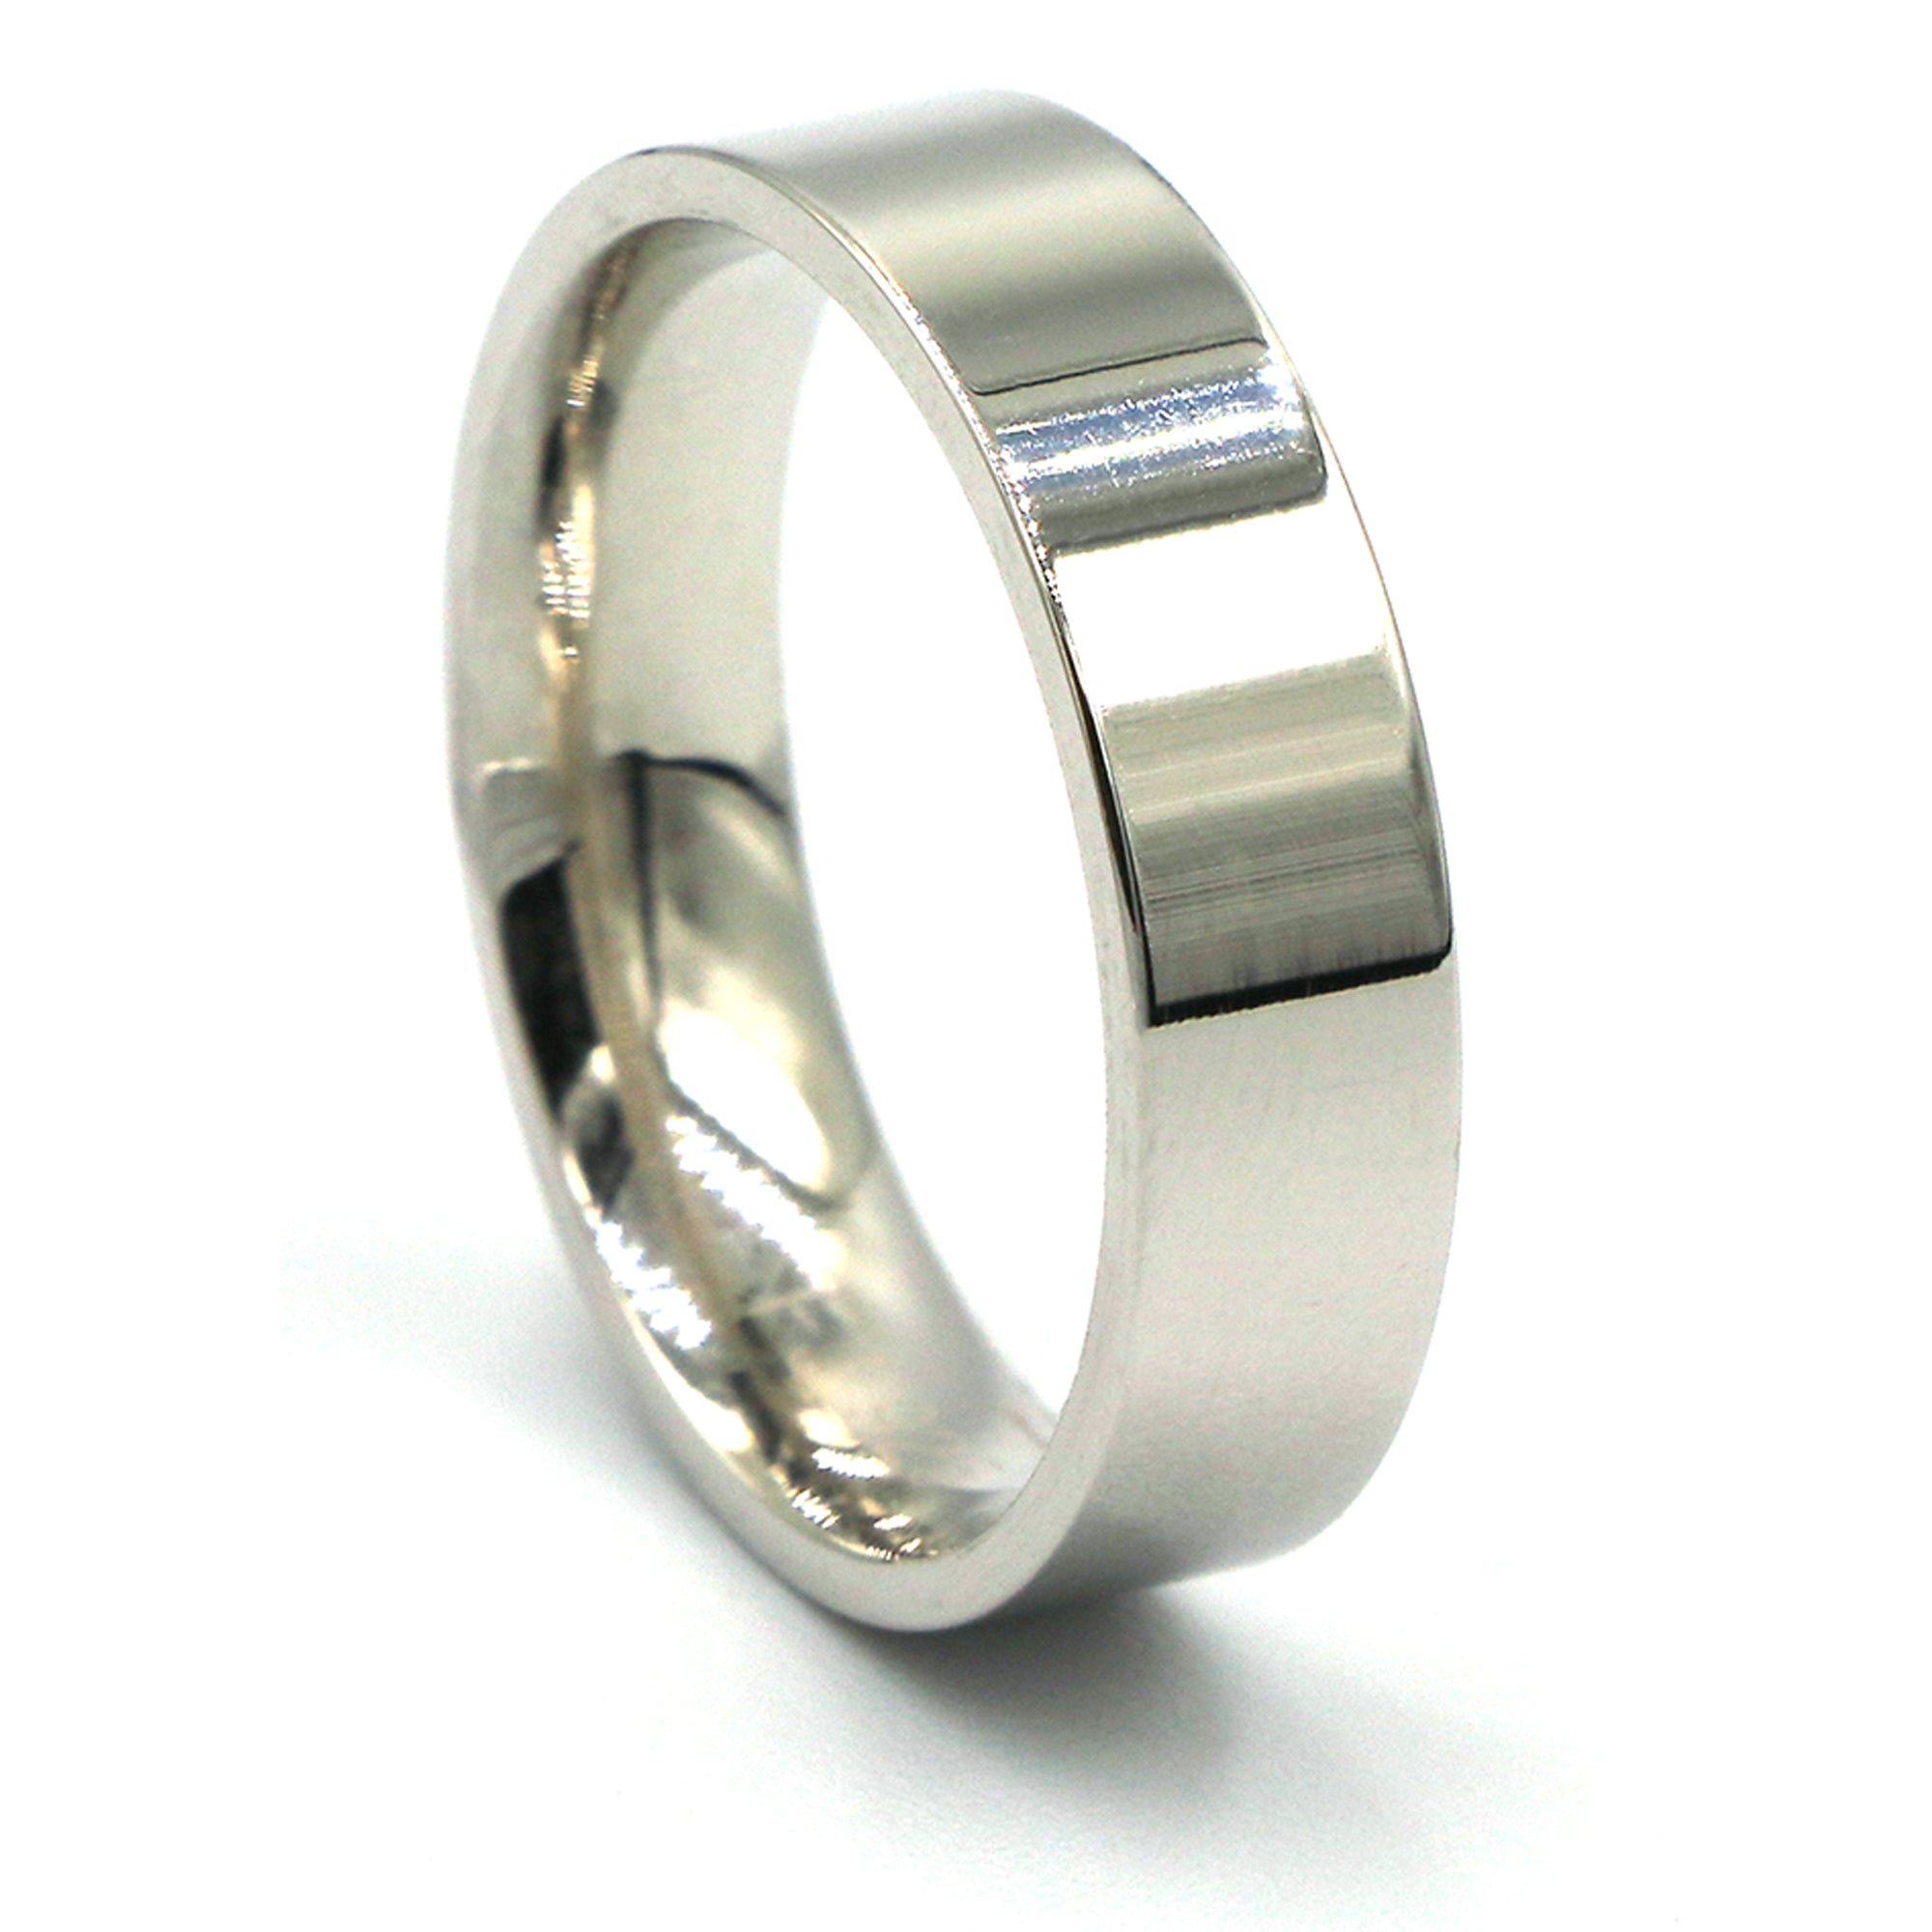 The Prettiest Wedding Rings for Women We've Ever Seen